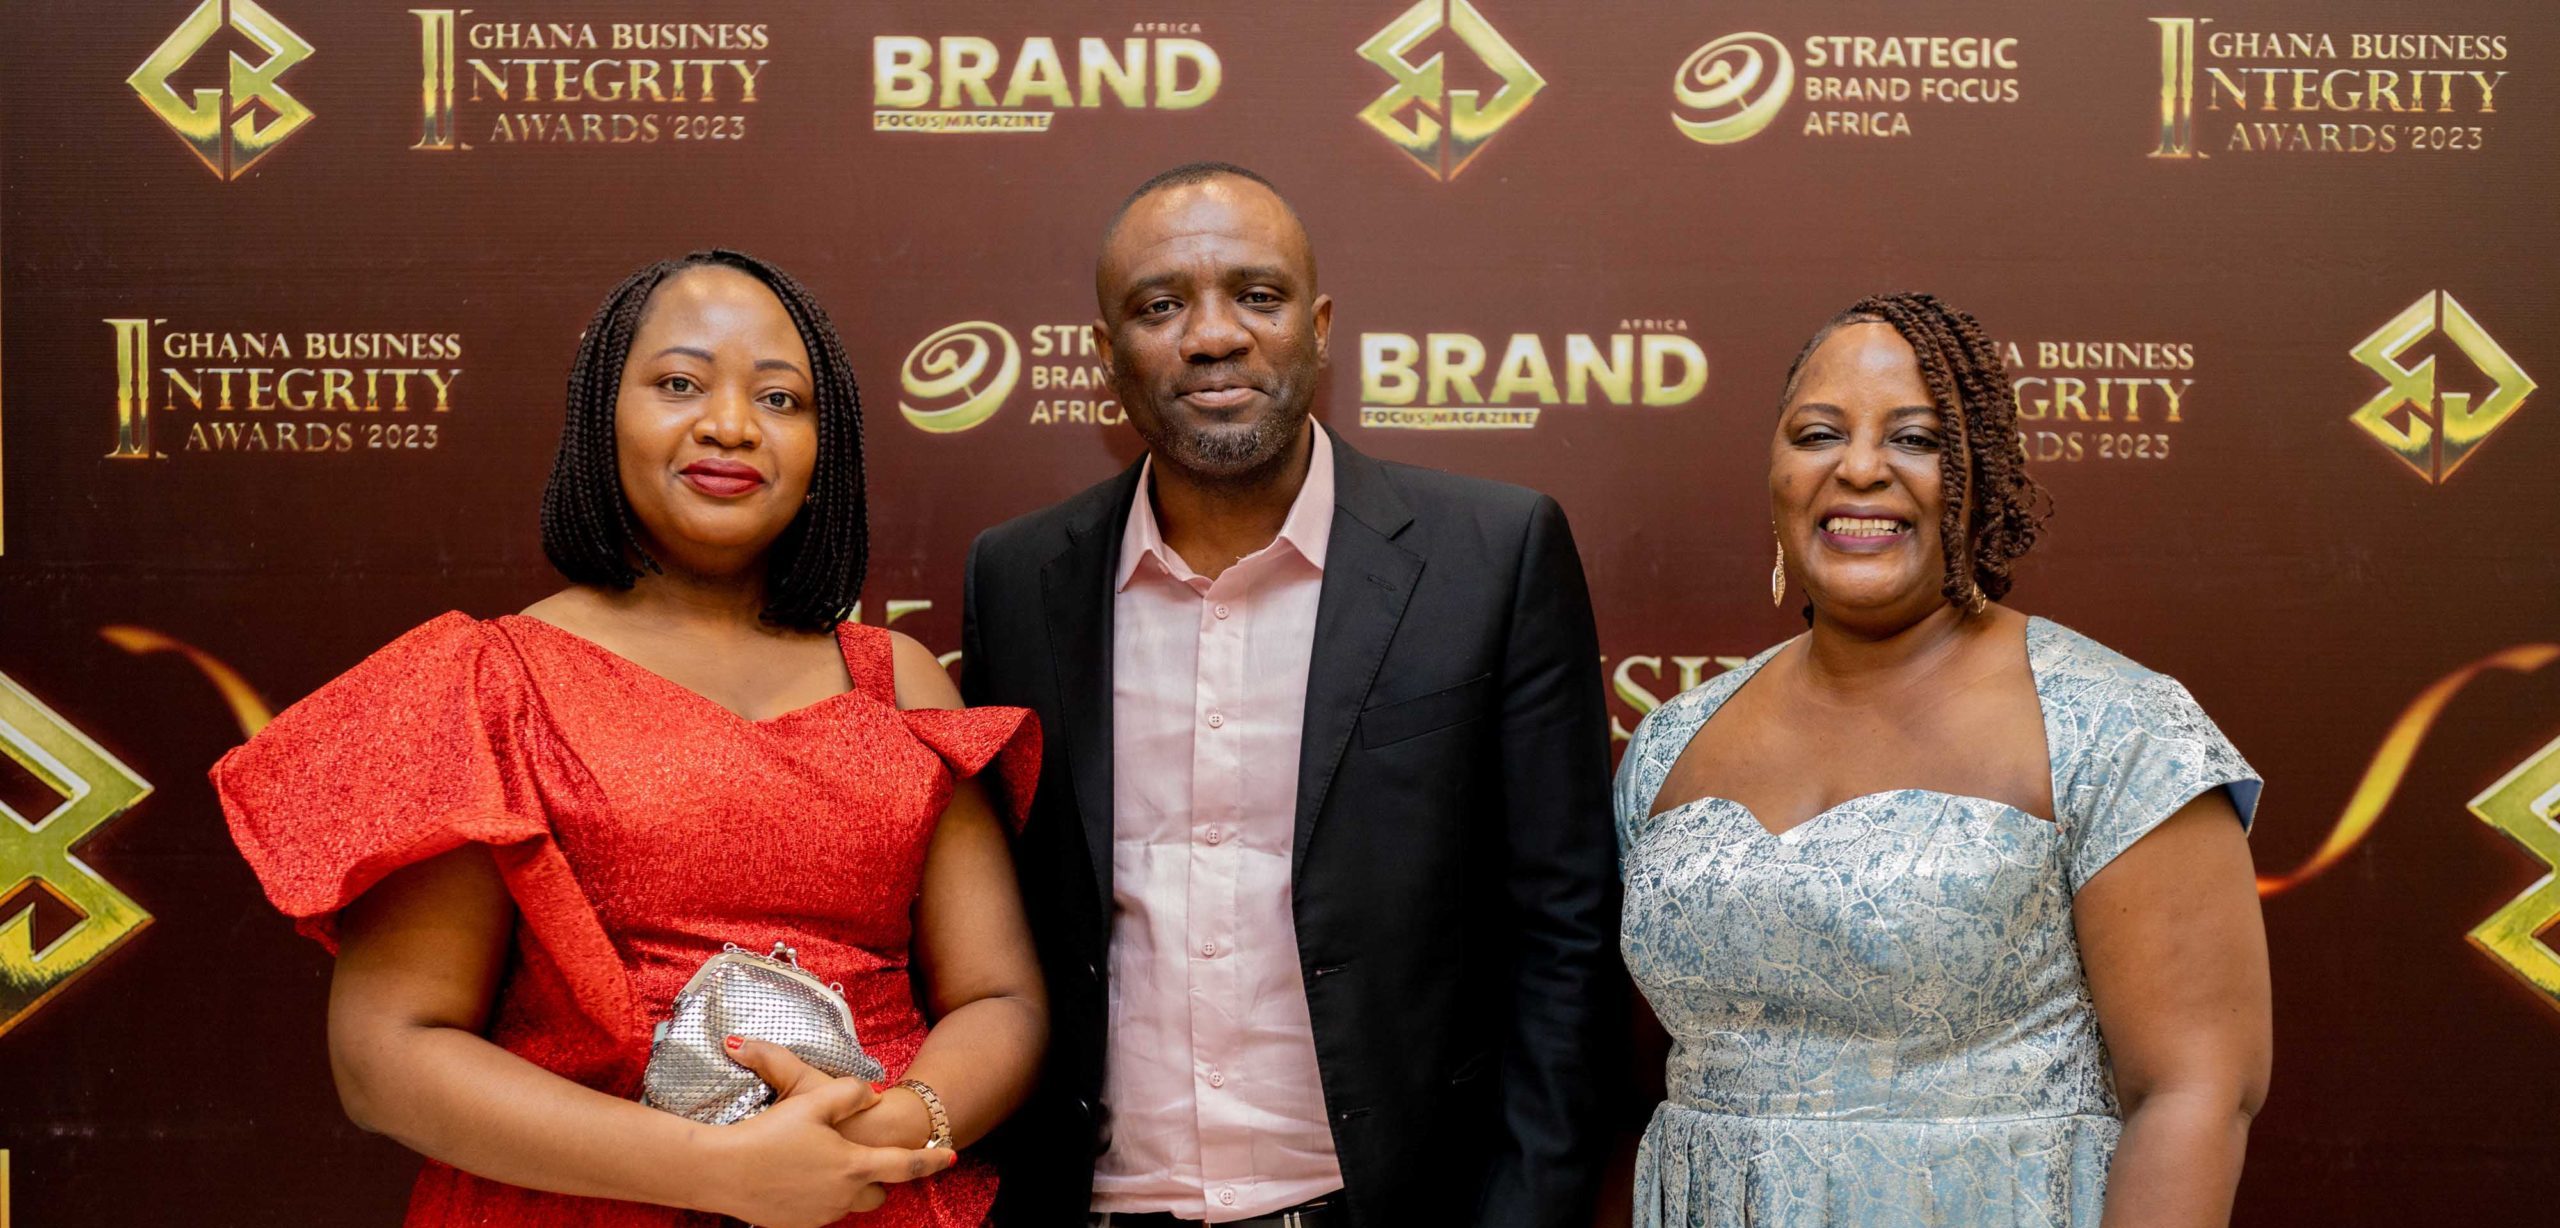 The Bank Hospital team at The Ghana Quality Healthcare Awards